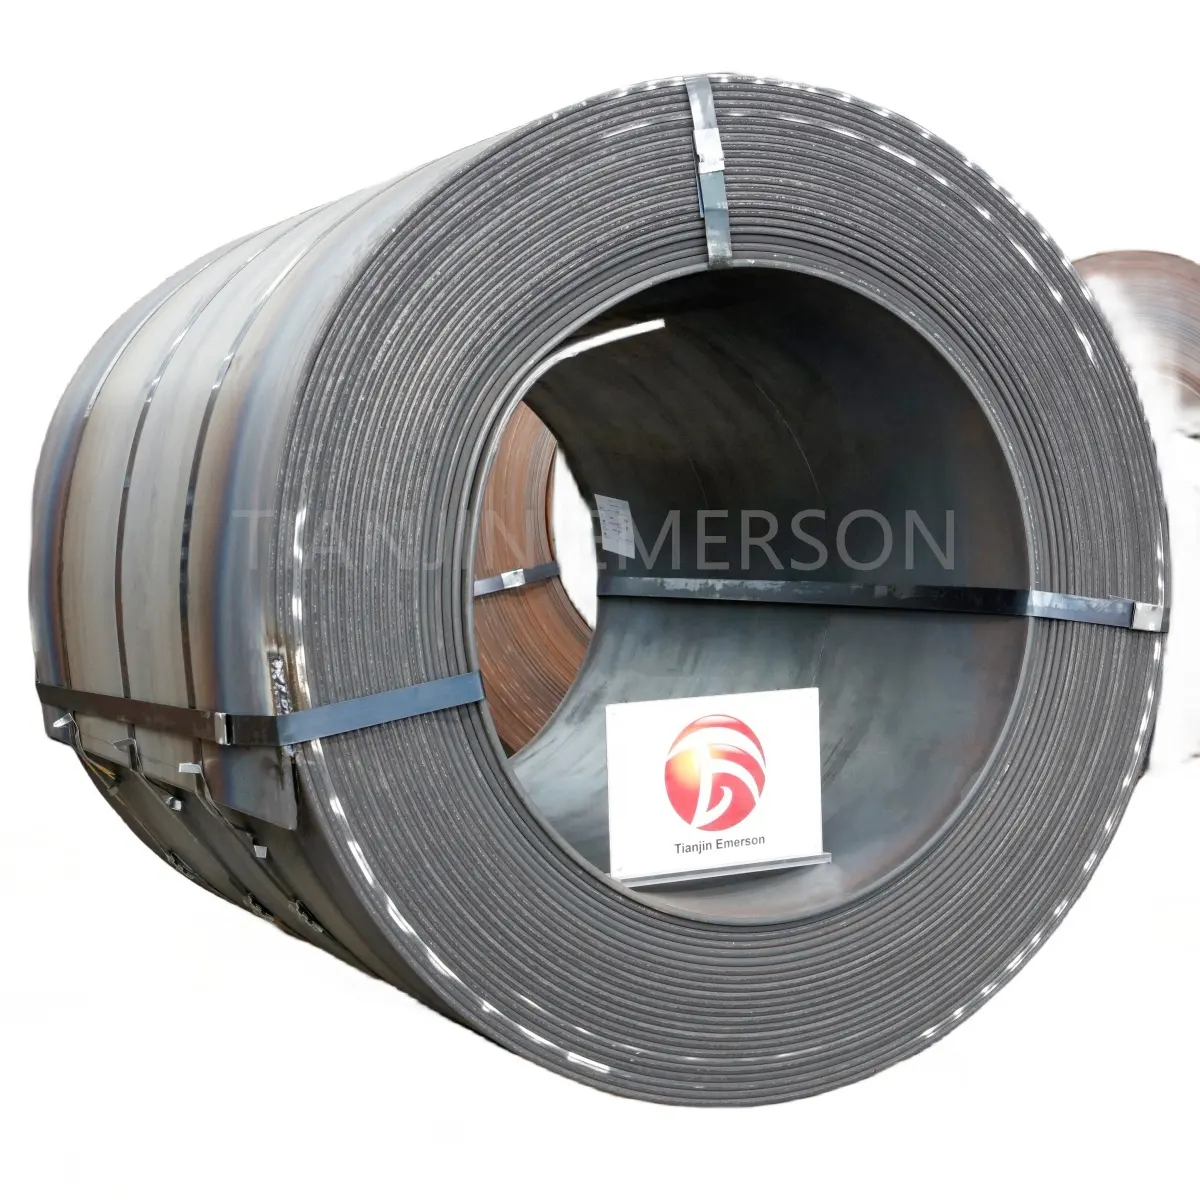 Dx53d Ss400 Q235 Q345 bobina de acero al carbono suave laminada en frío/lámina tiras de acero de resorte duro endurecido y templado